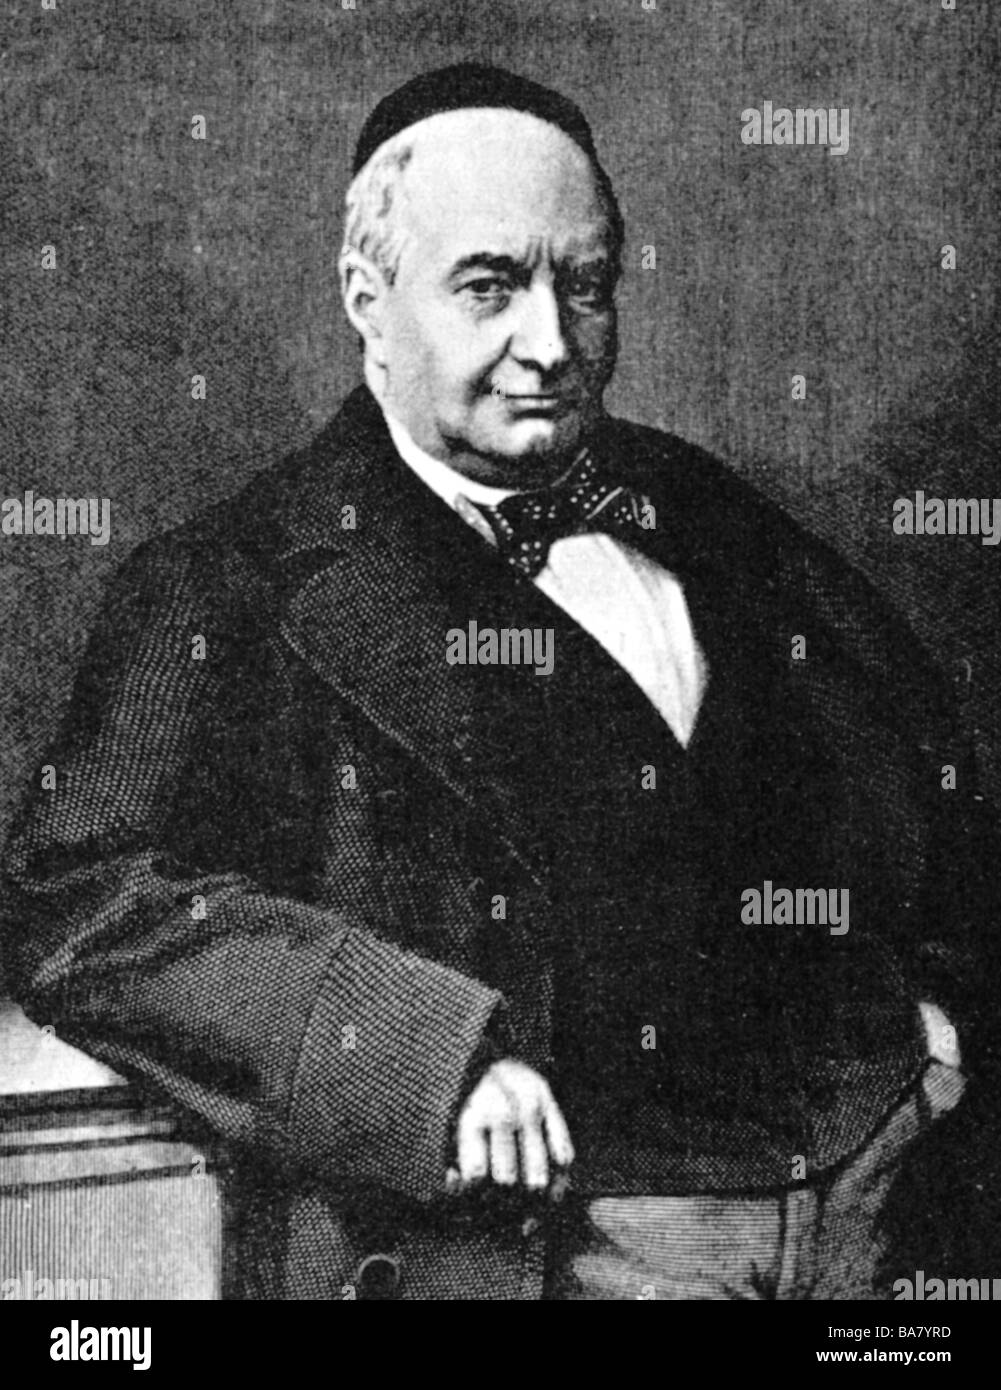 Sainte-Beuve, Charles-Augustin, 23.12.1804 - 13.10.1869, French poet, literary critic, half length, engraving, circa 1845, Stock Photo